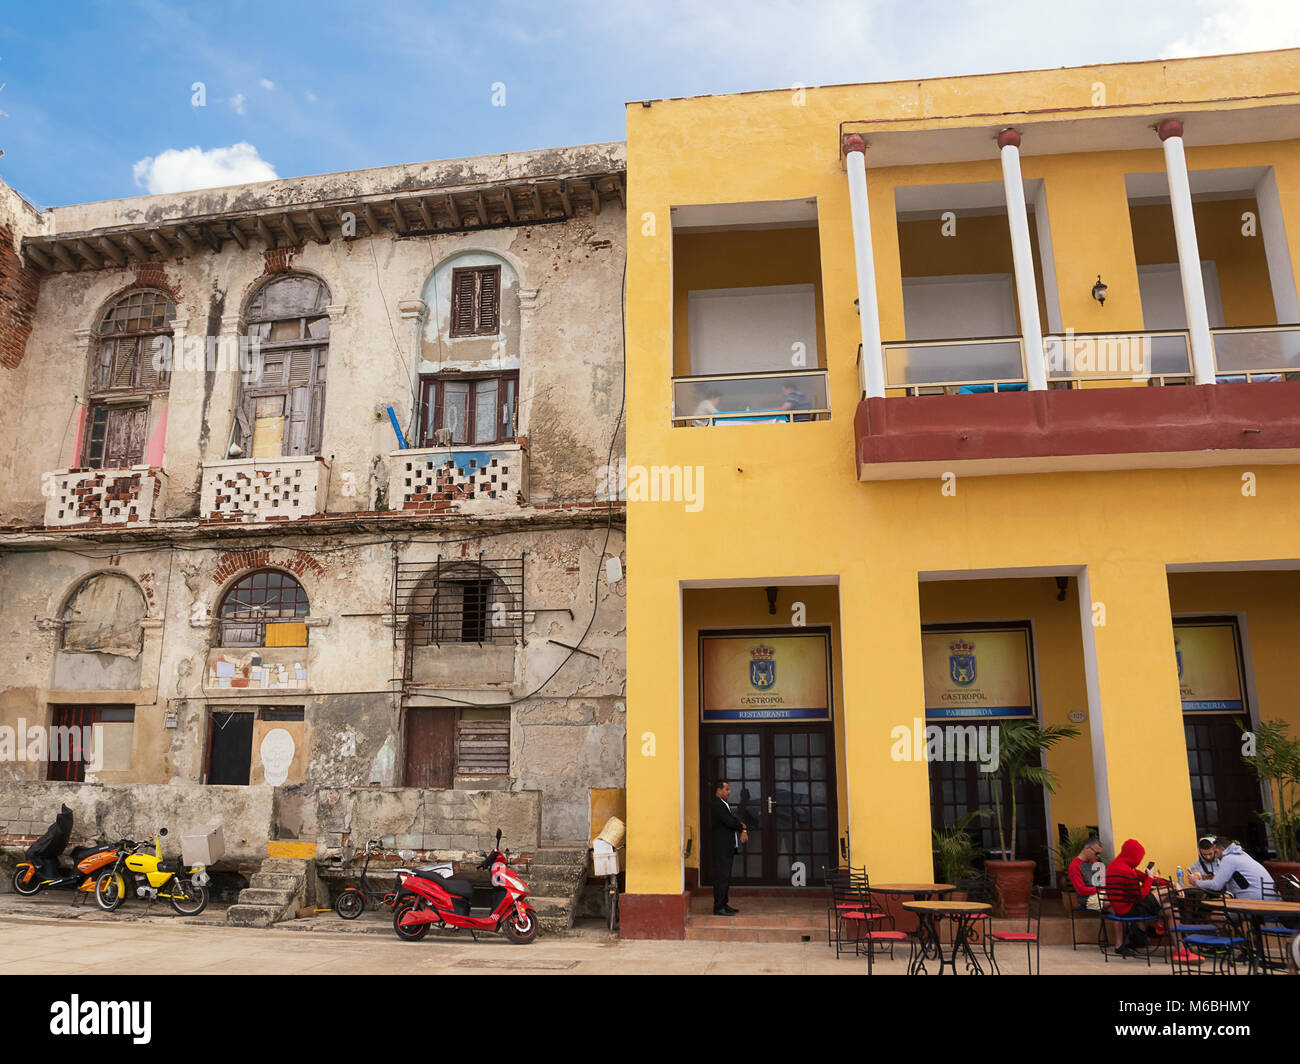 Havana, Cuba - December 11, 2017: Contrast between renovated and decadent buildings on the Malecon of Havana Stock Photo